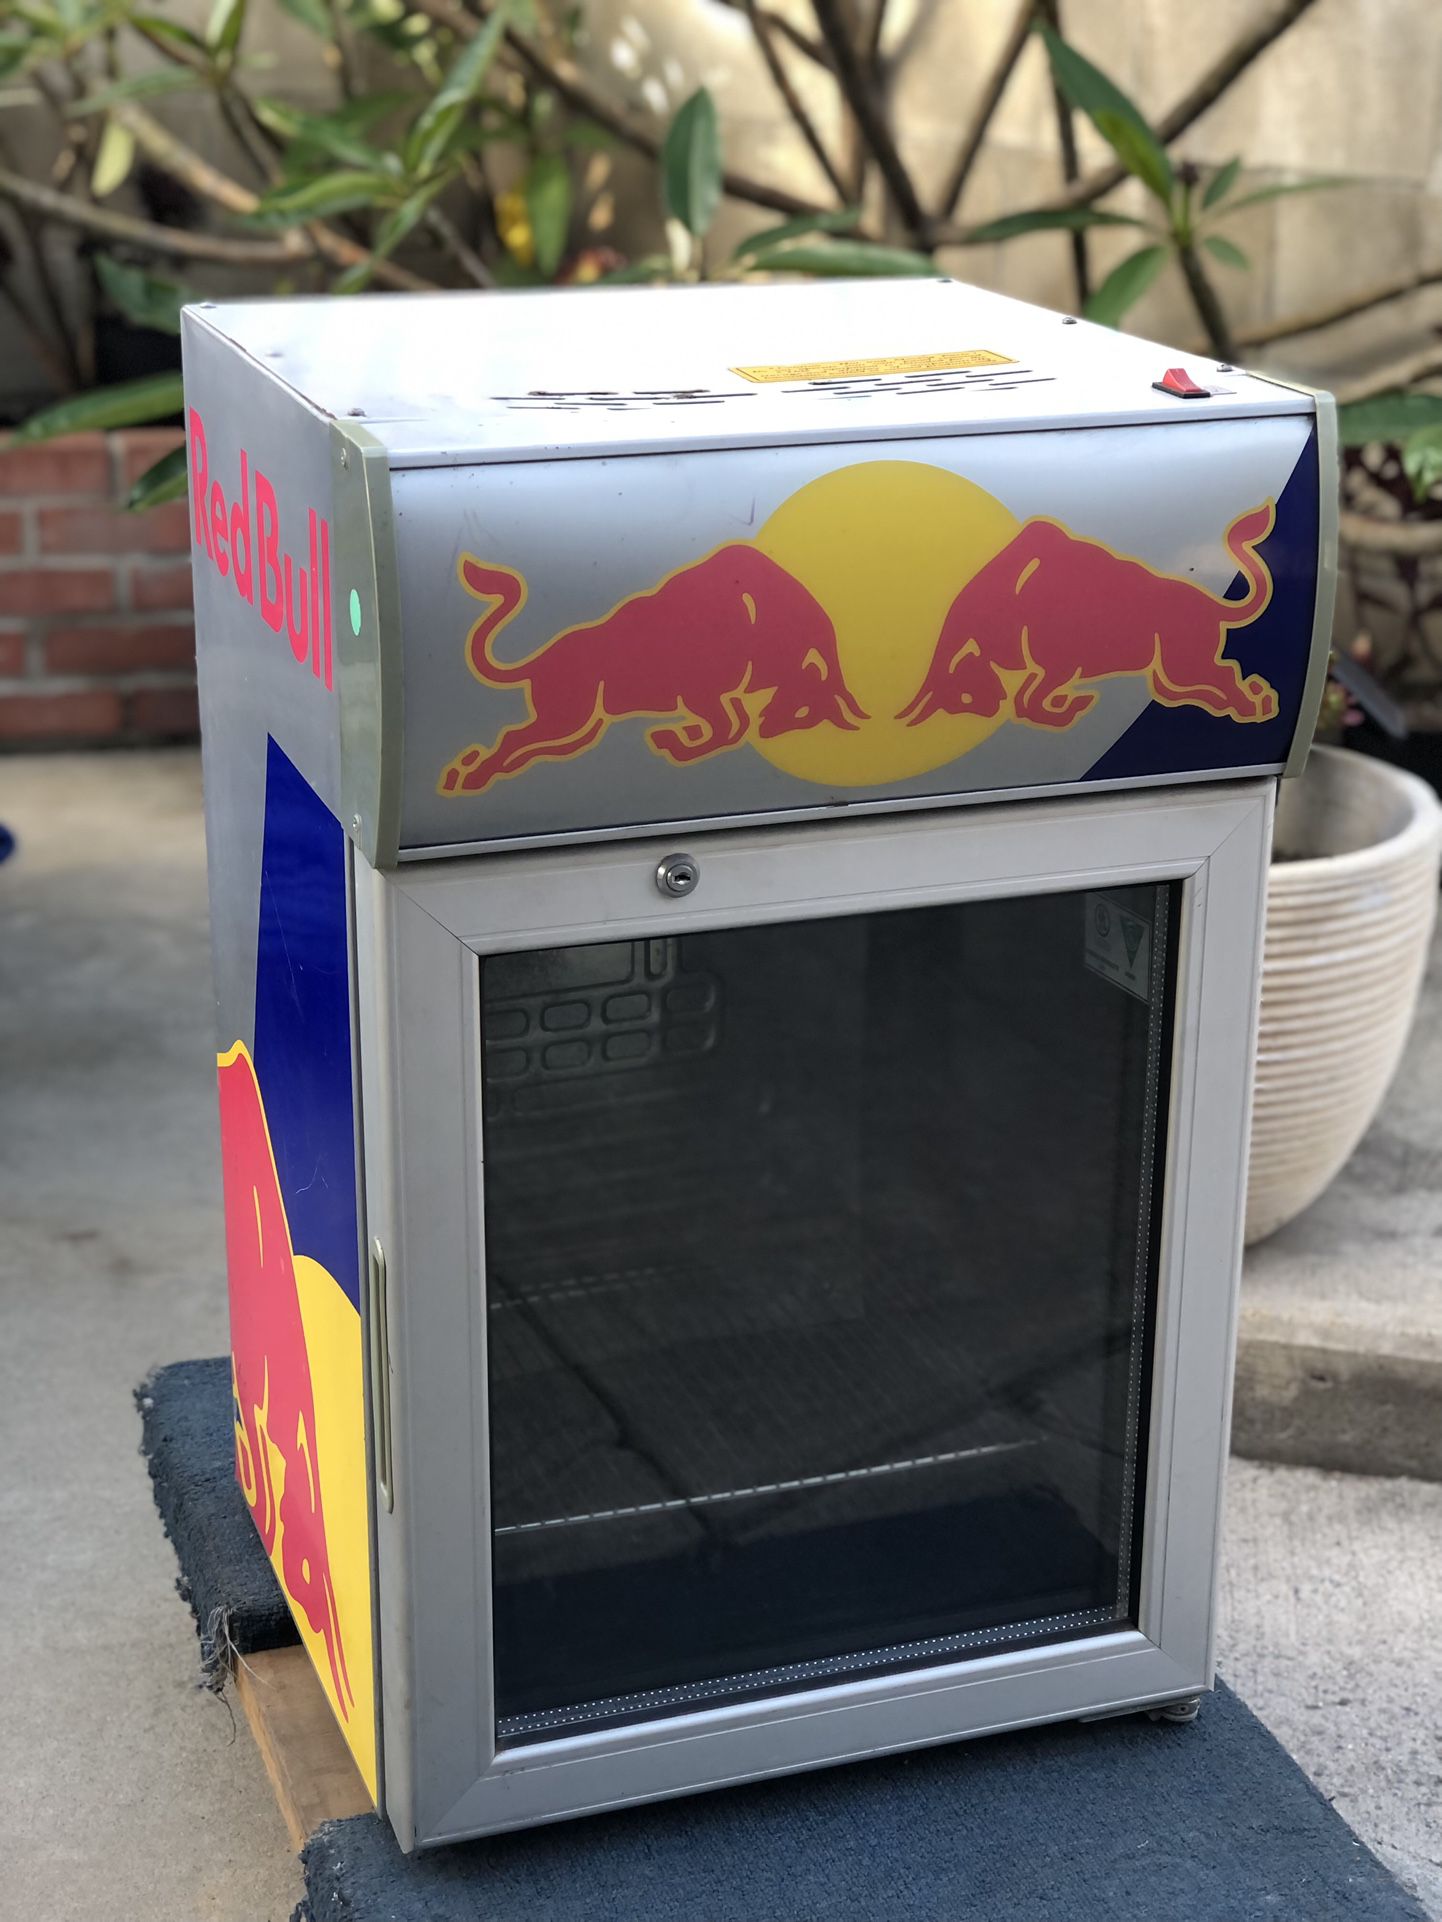 Red Bull Mini refrigerator